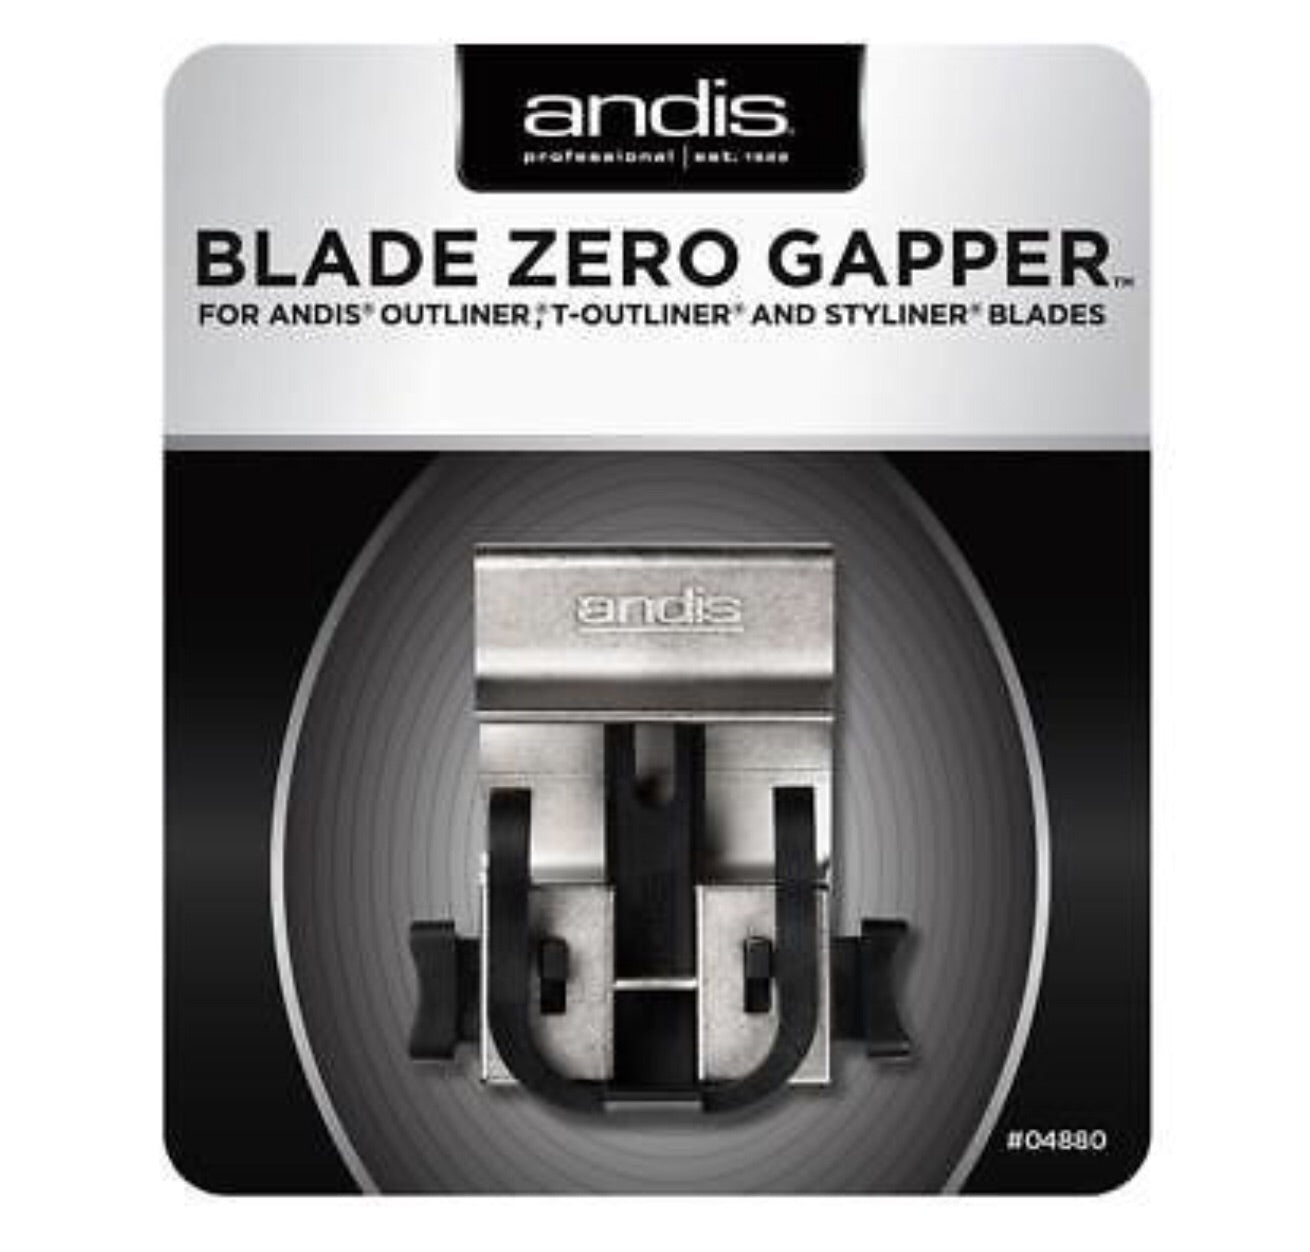 Zero Gapper AndisAndis Blade Zero Gapper